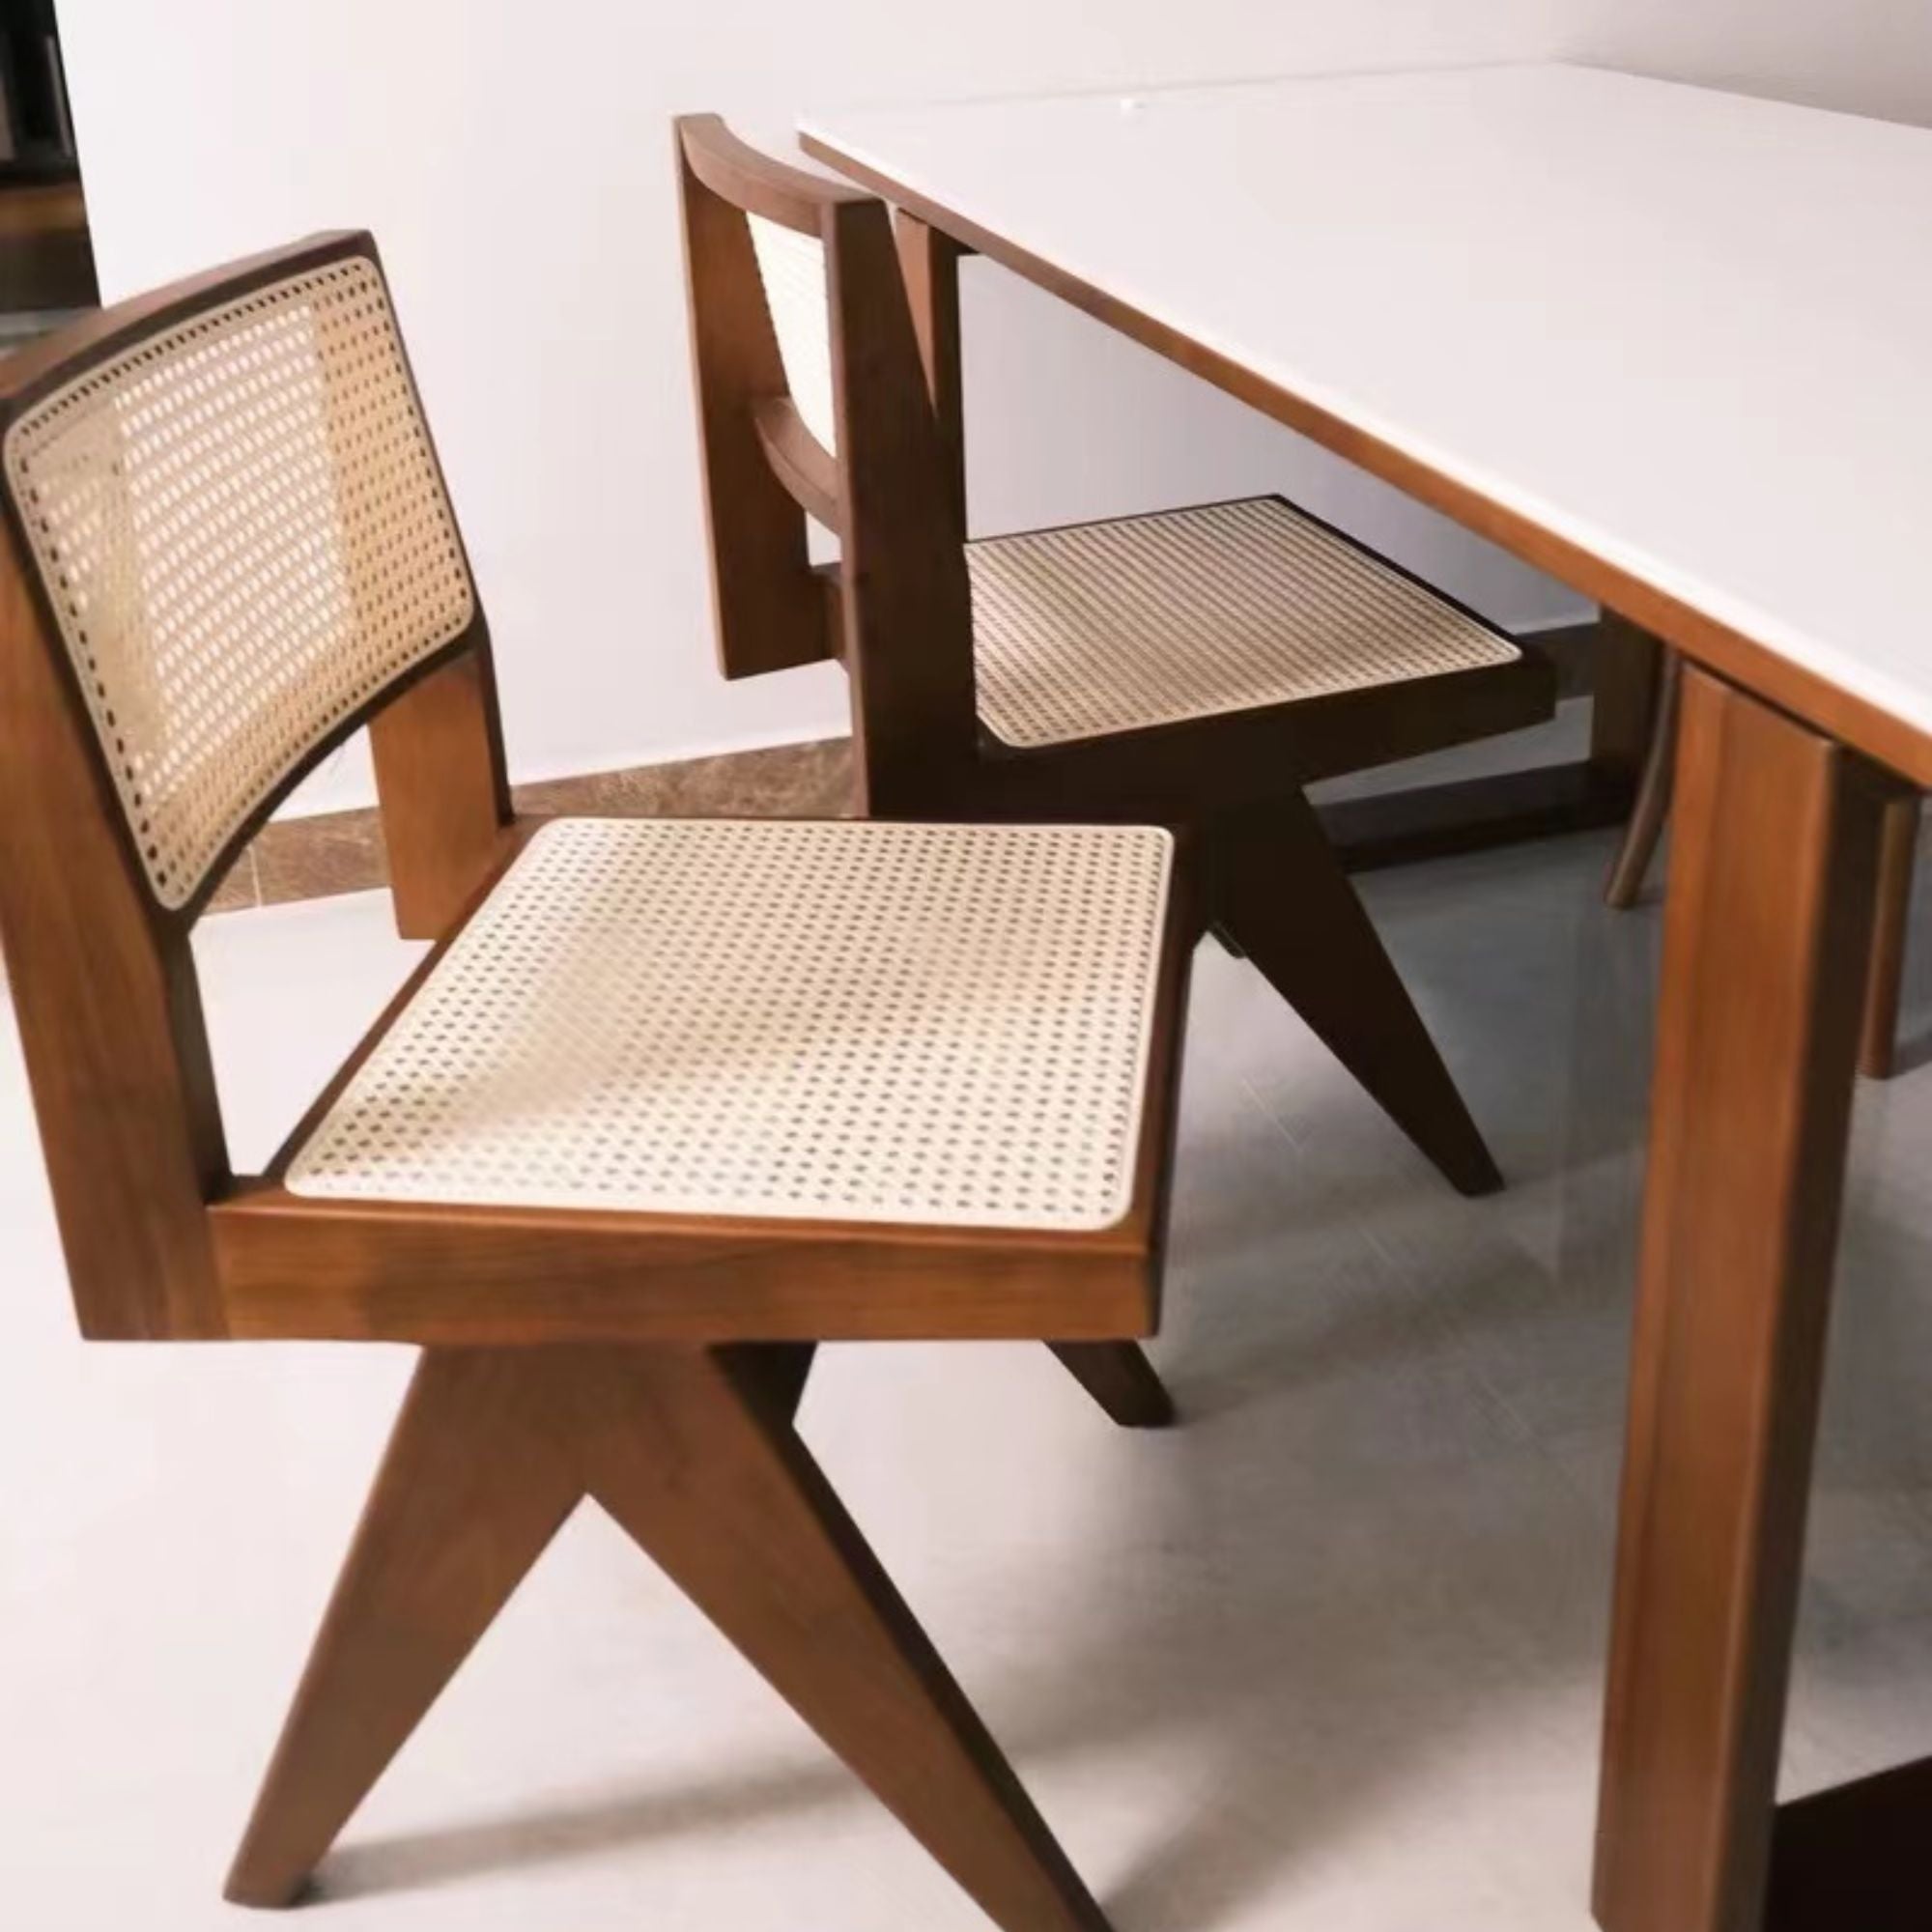 Tara poplar wood chair